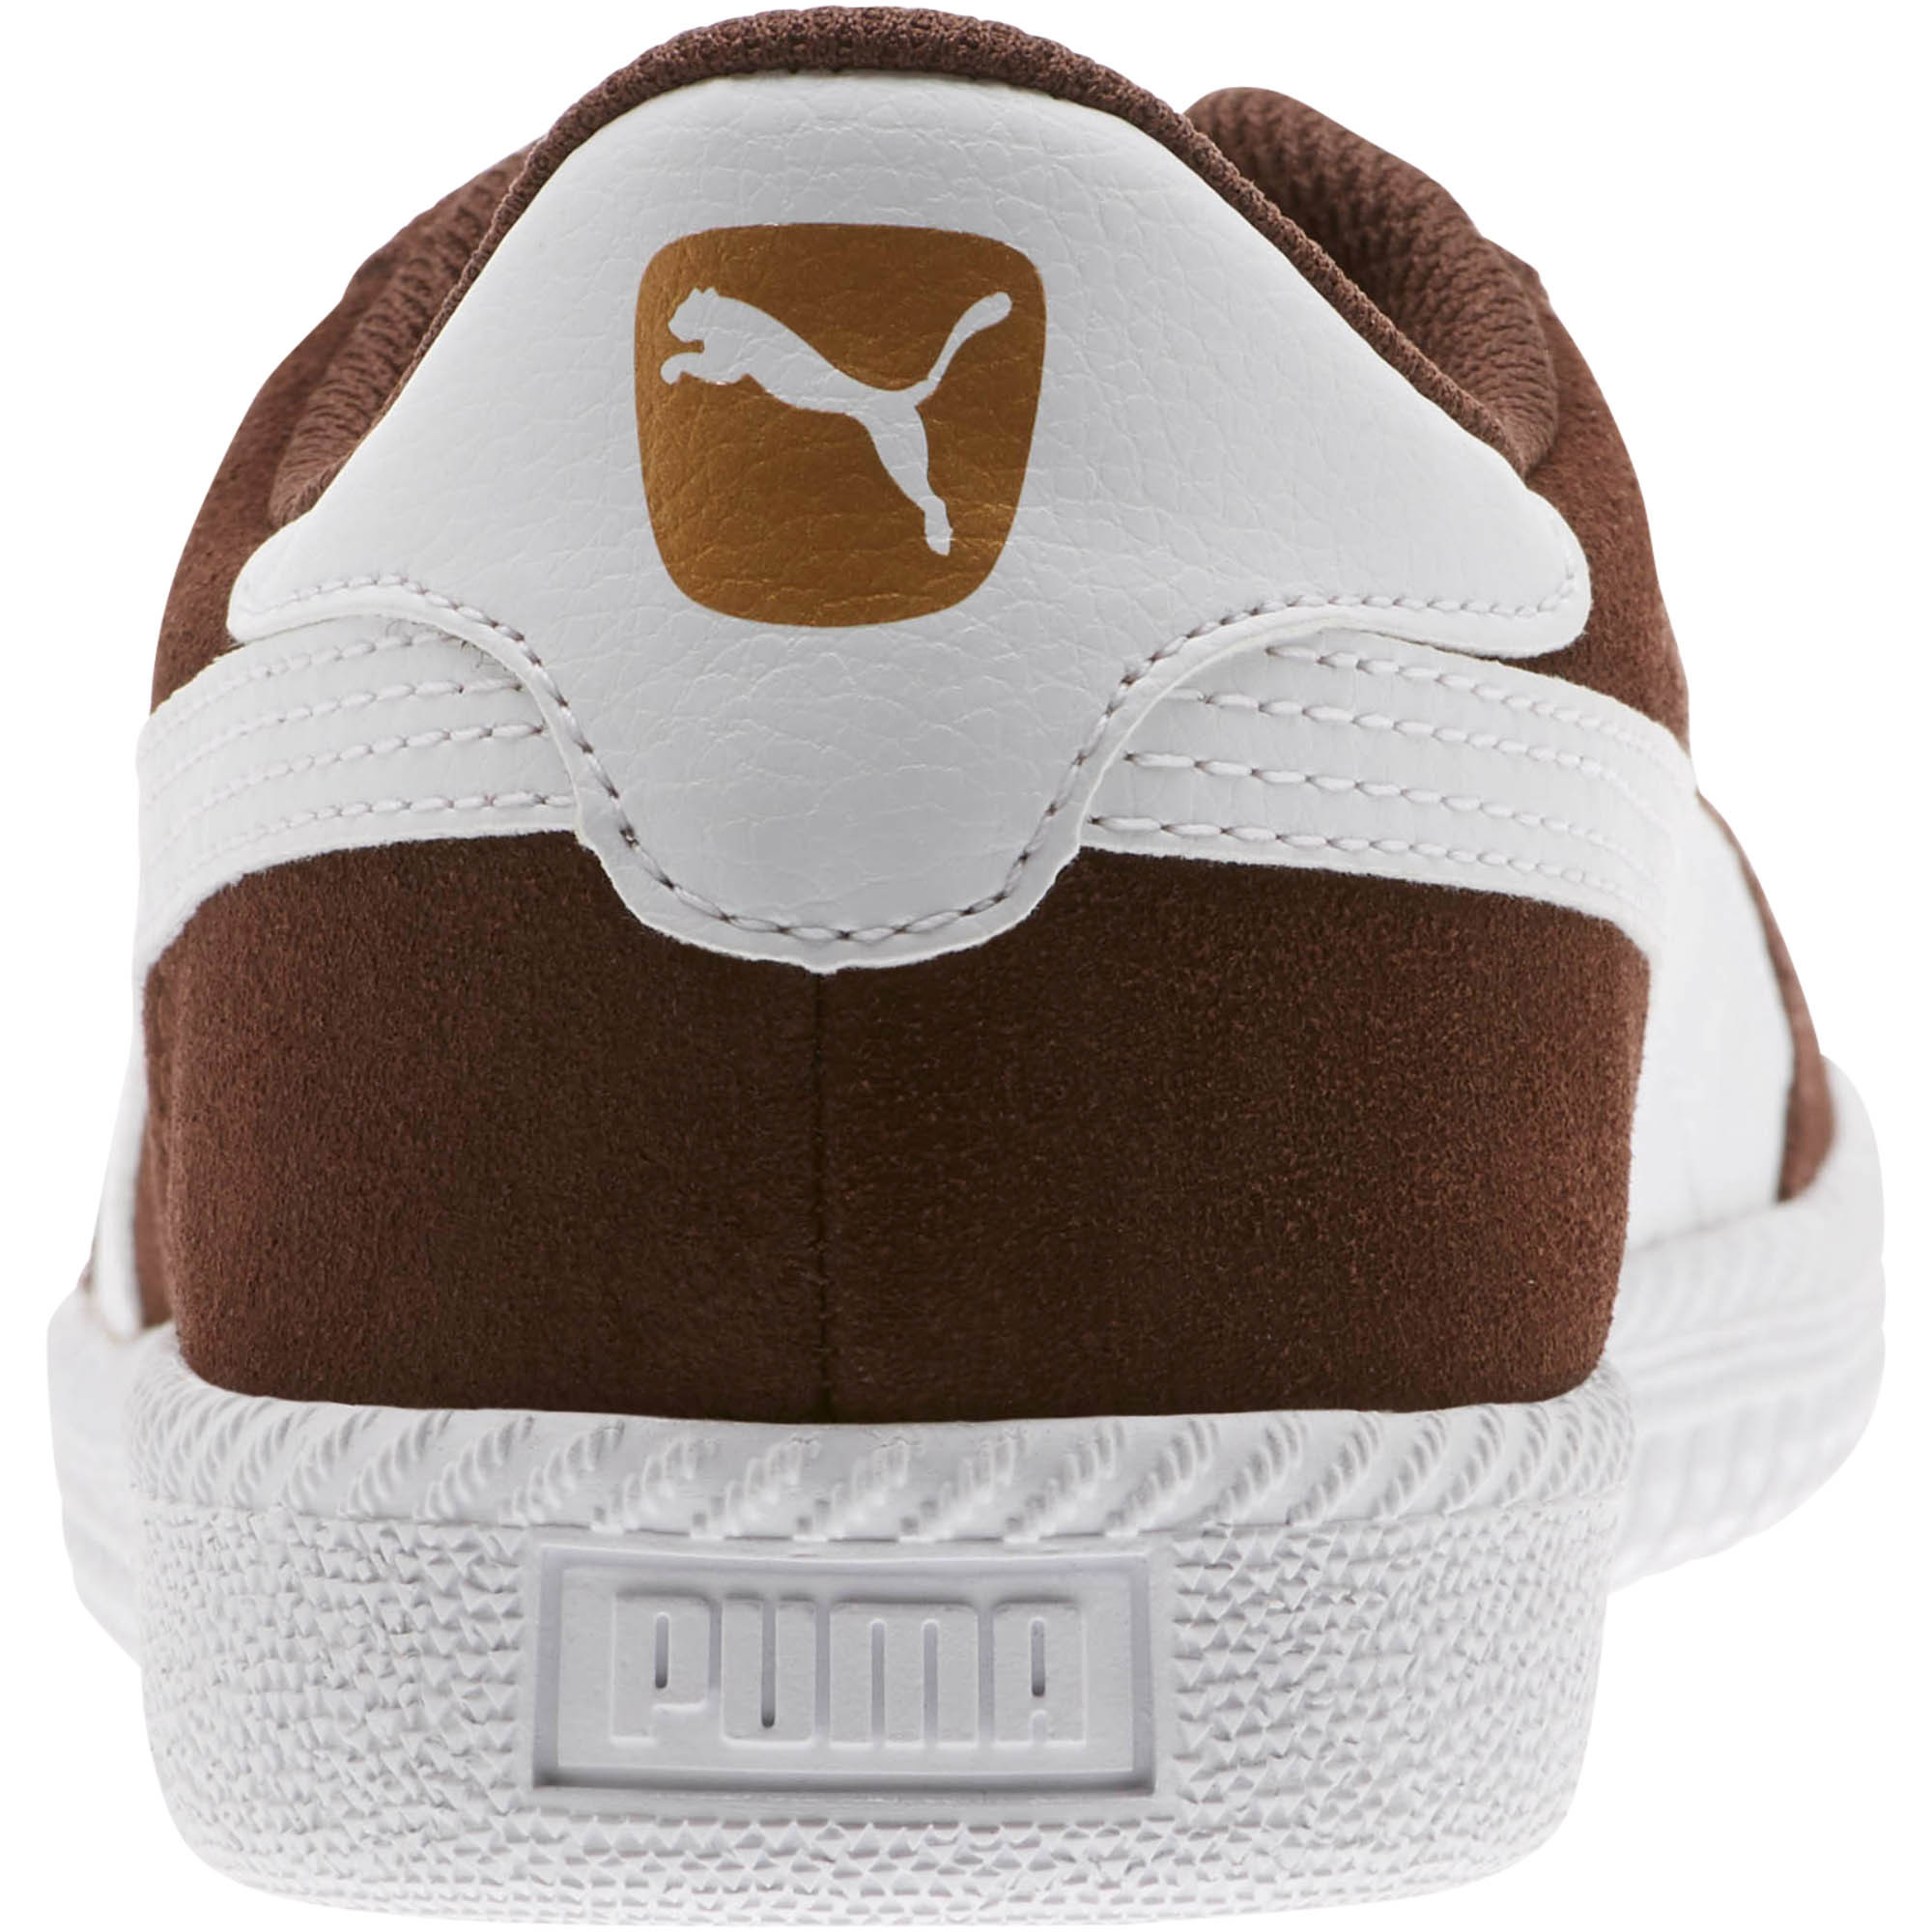 Official Puma Store: PUMA Astro Cup Suede Sneakers | Rakuten.com